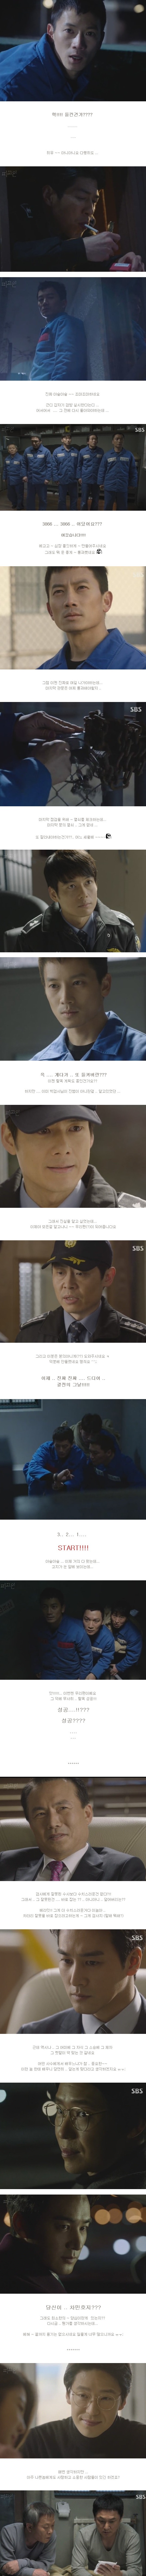 episode 12 captures for the Korean drama 'Defendant'